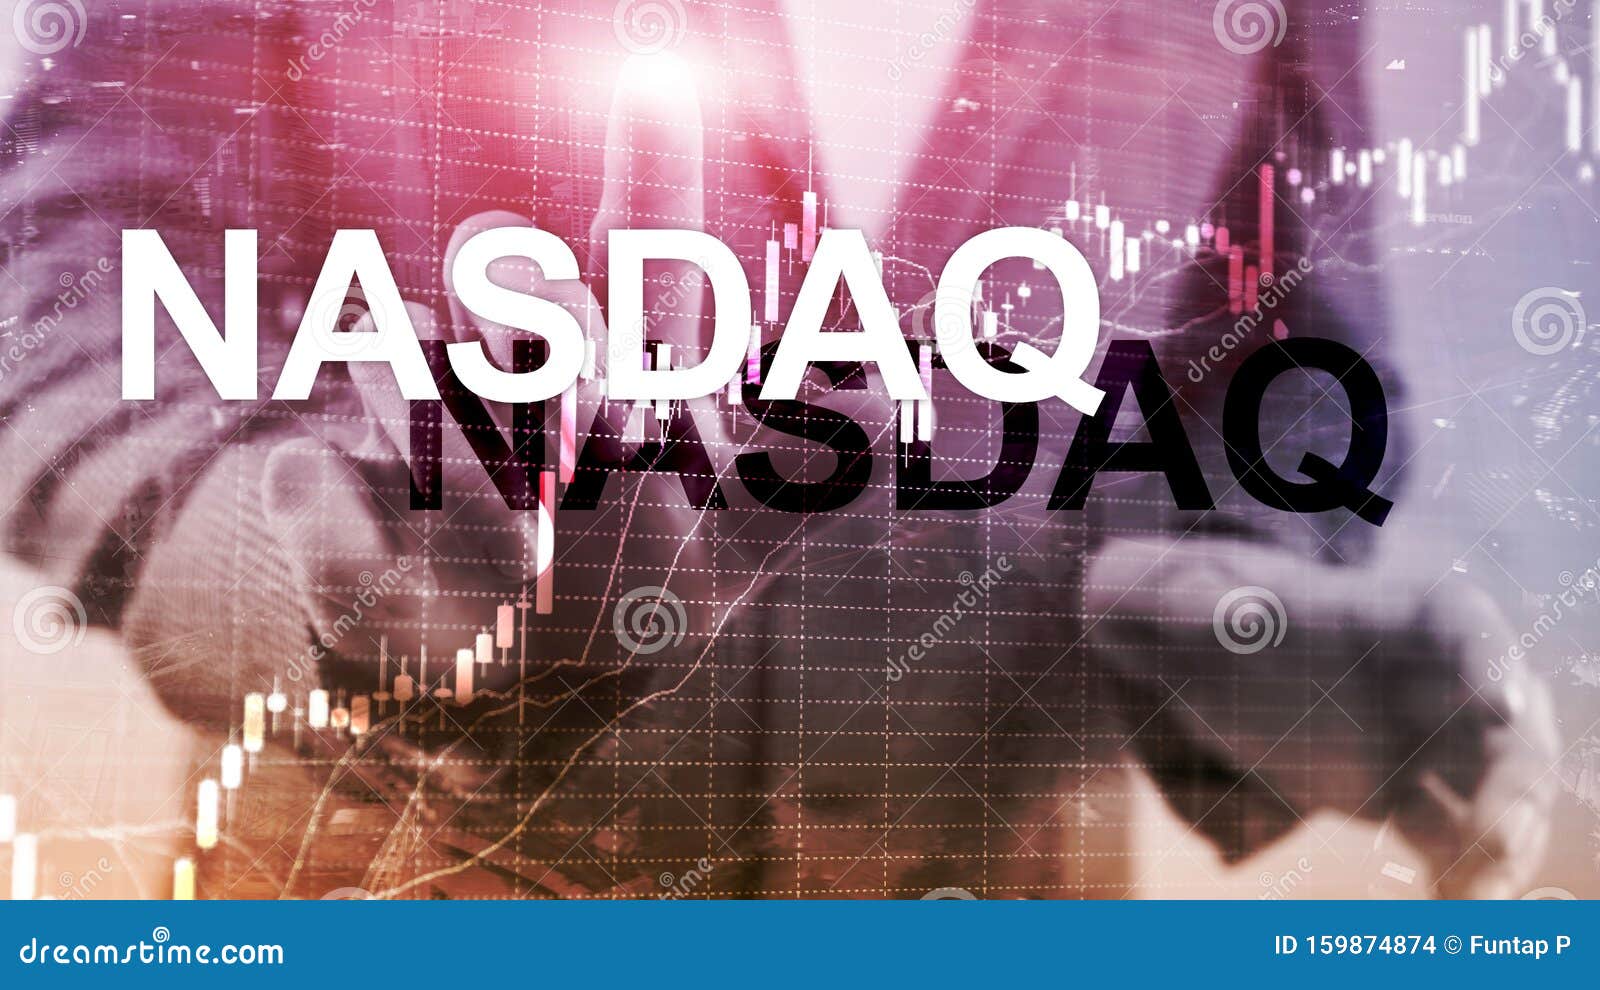 nasdaq. national association of securities dealers automated quotation.